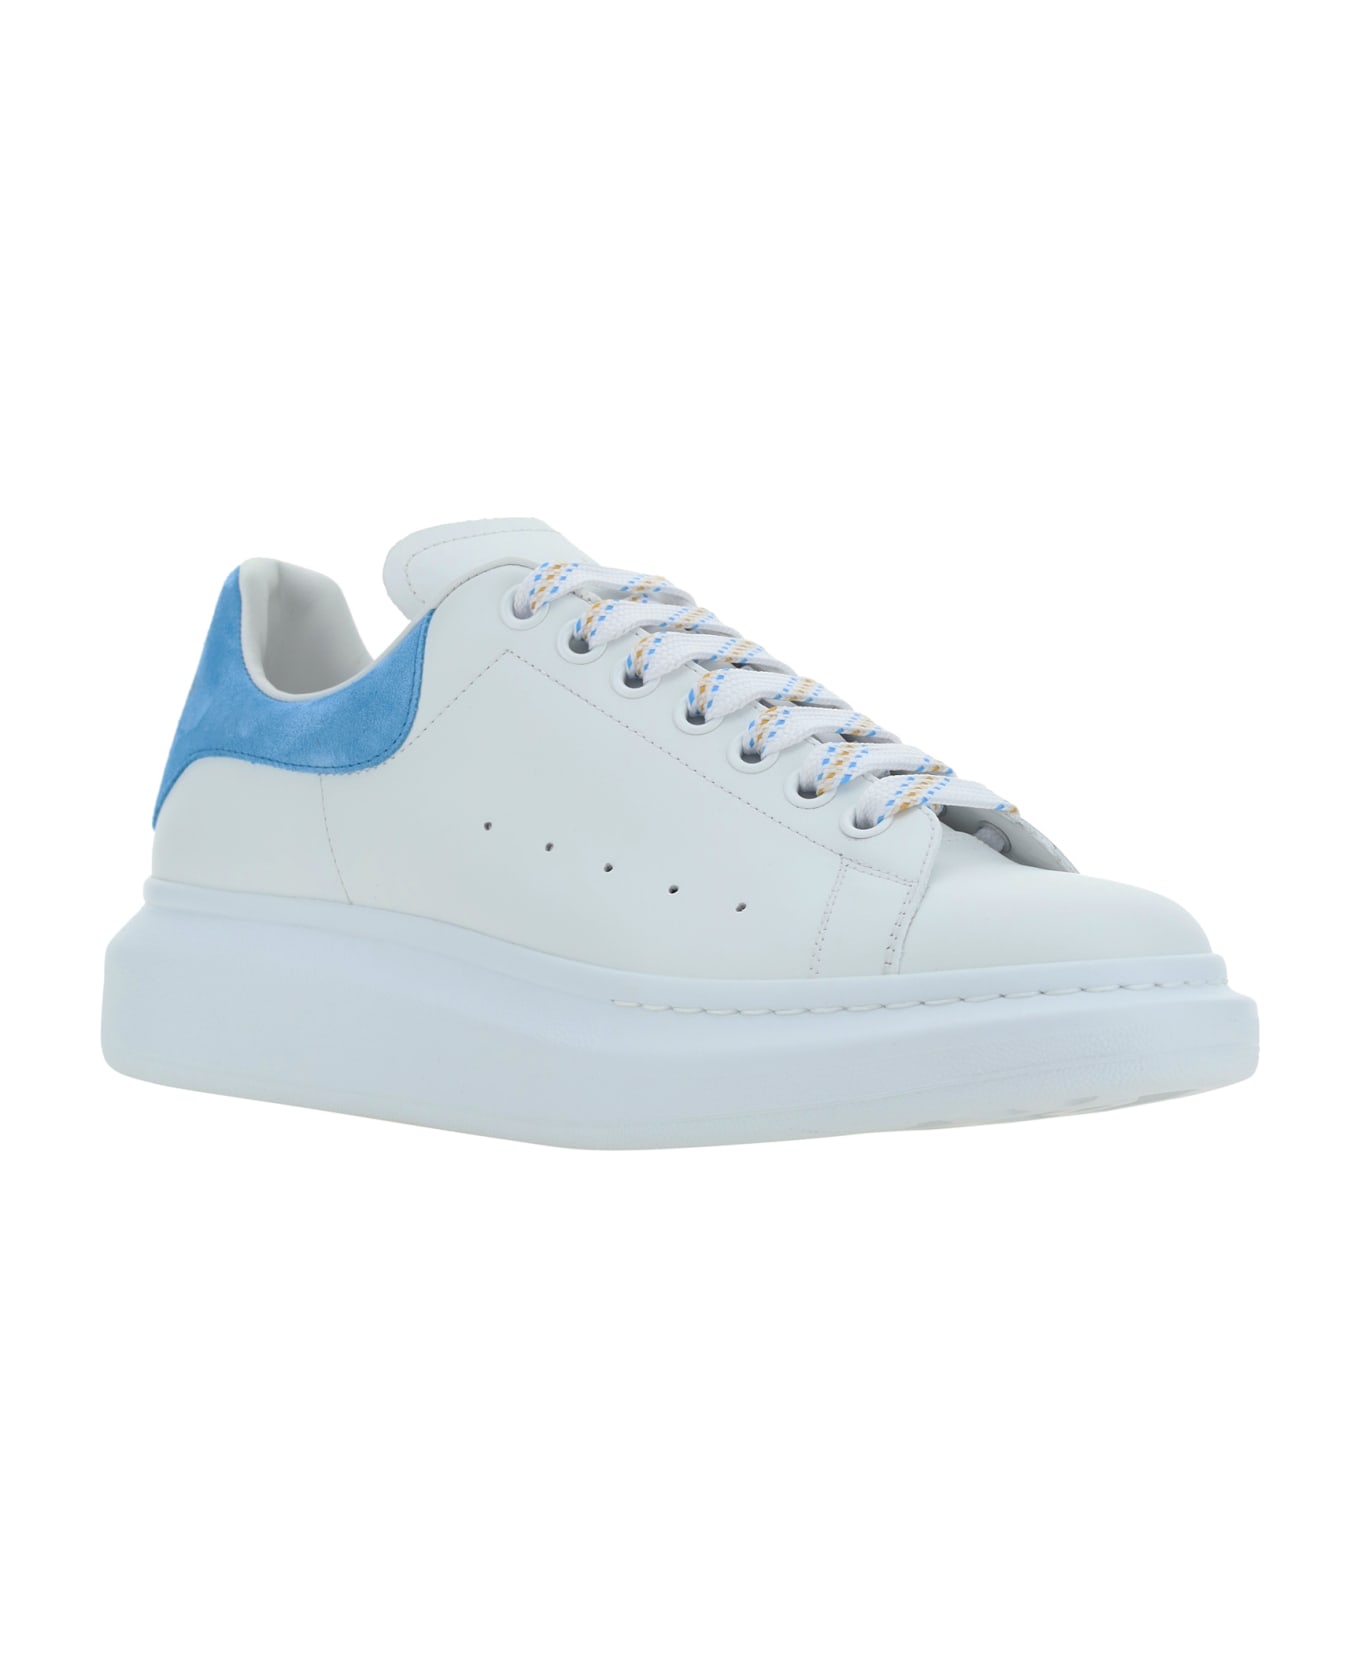 Alexander McQueen Sneakers - White/light blue